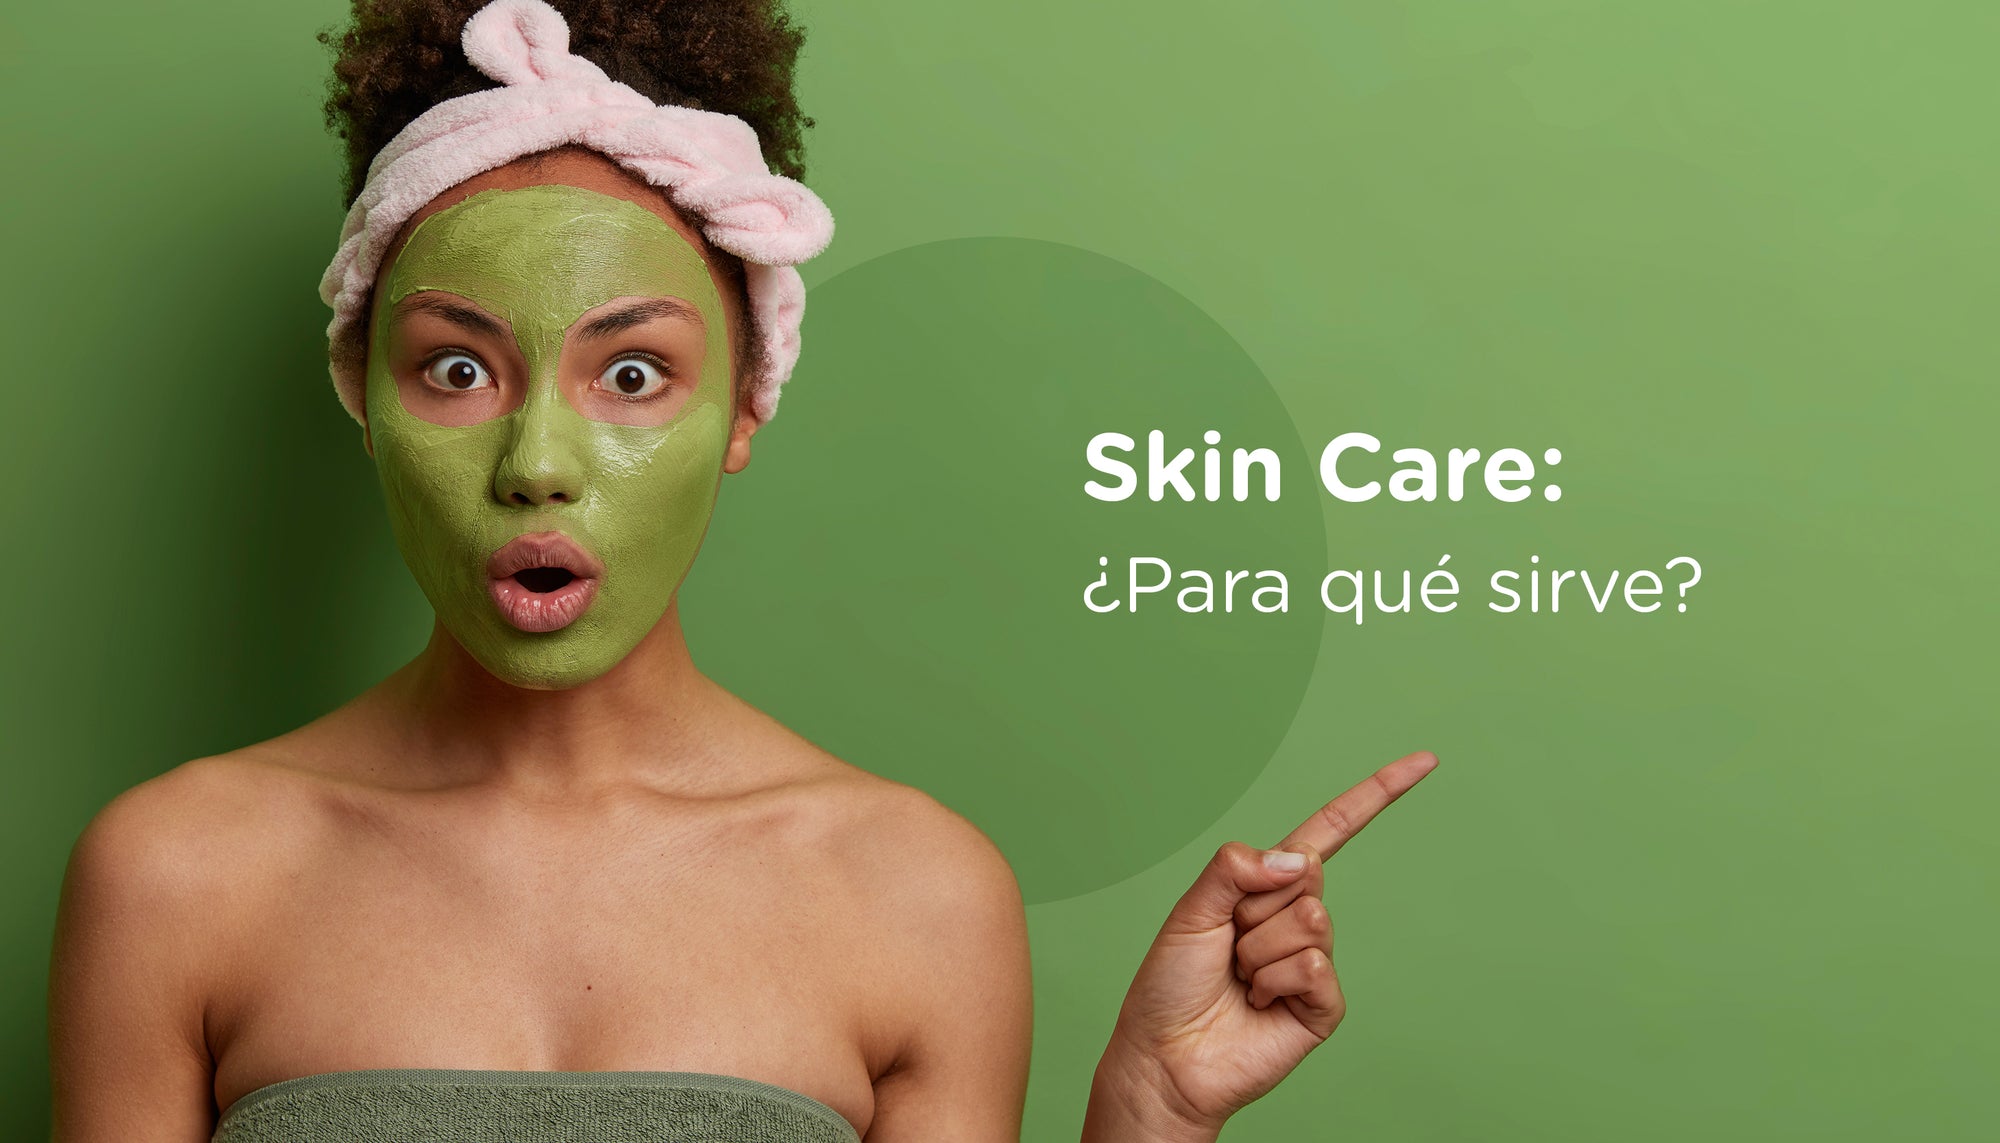 Skin care: ¿para qué sirve?